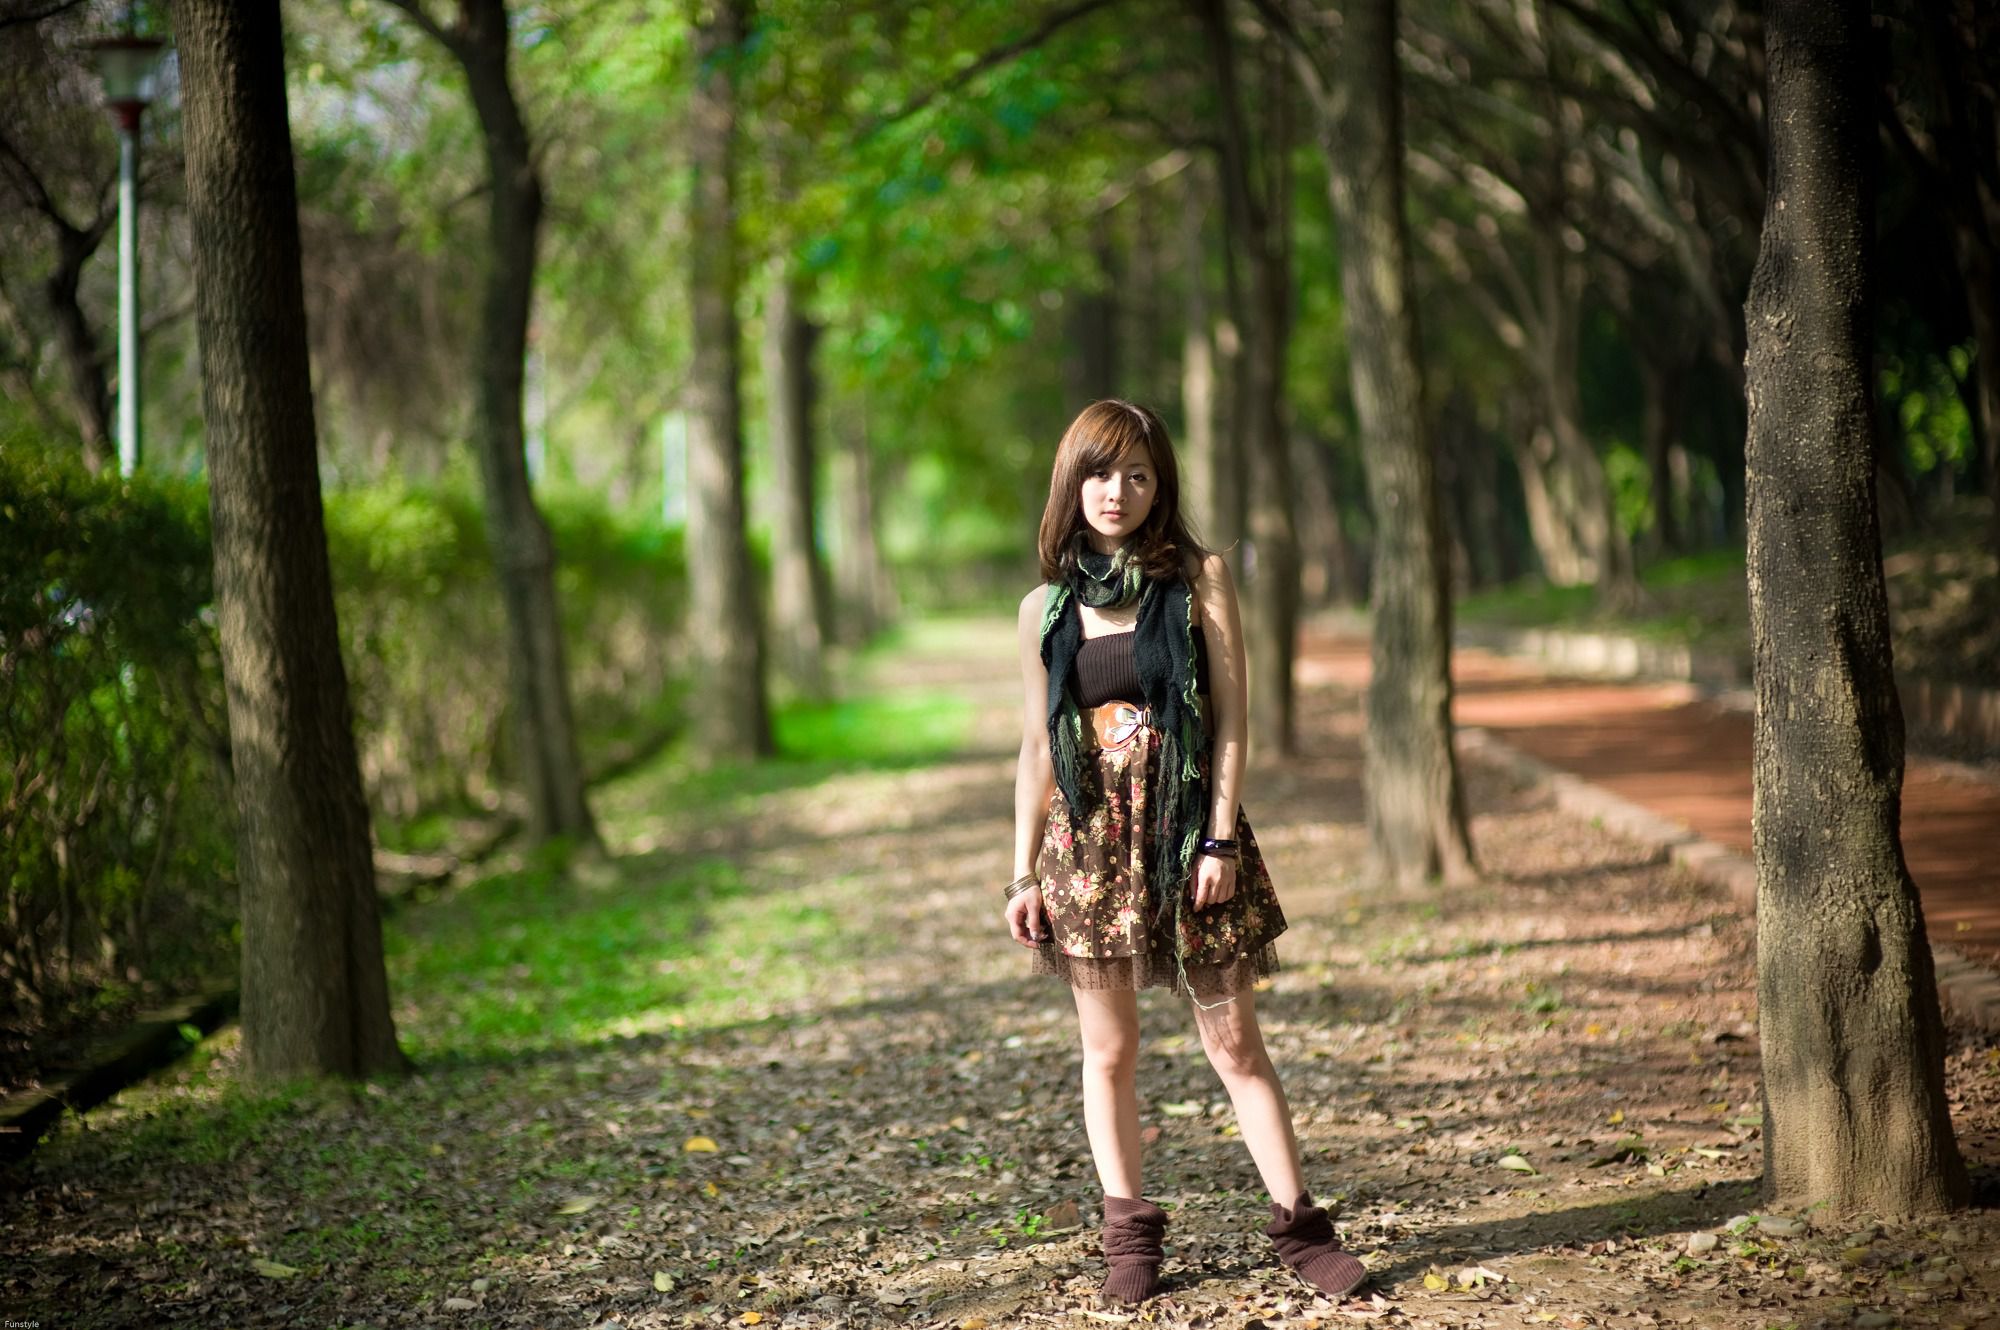 Fruit MM / Zhang Kaijie “Si Si Nan Village + Da’an Forest Park Out” Photo Album